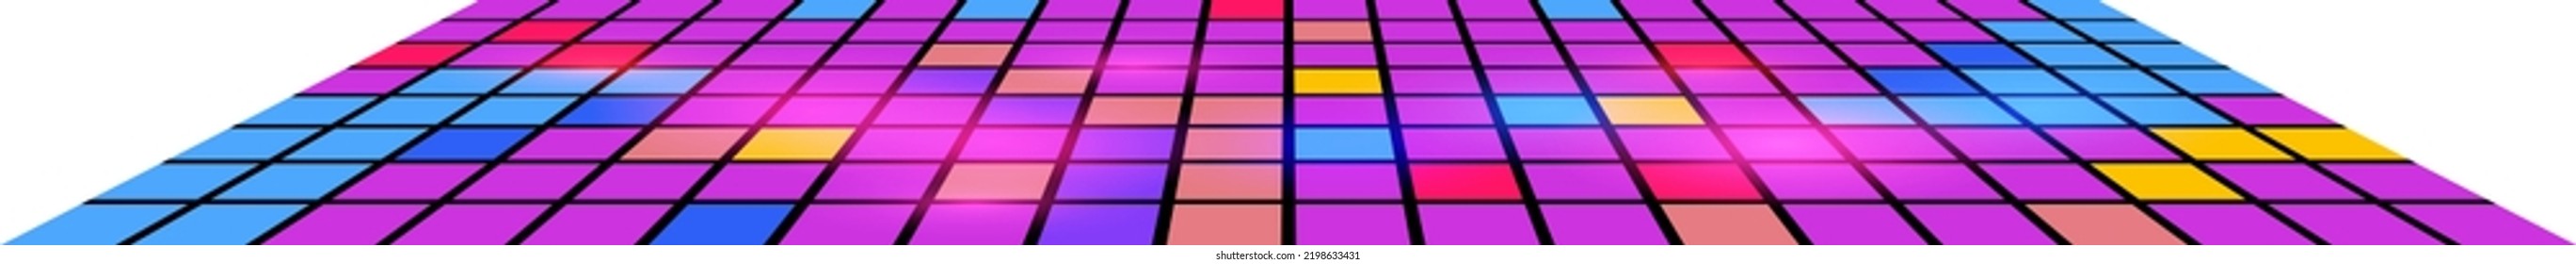 Dance Floor Colorful Vector Illustration